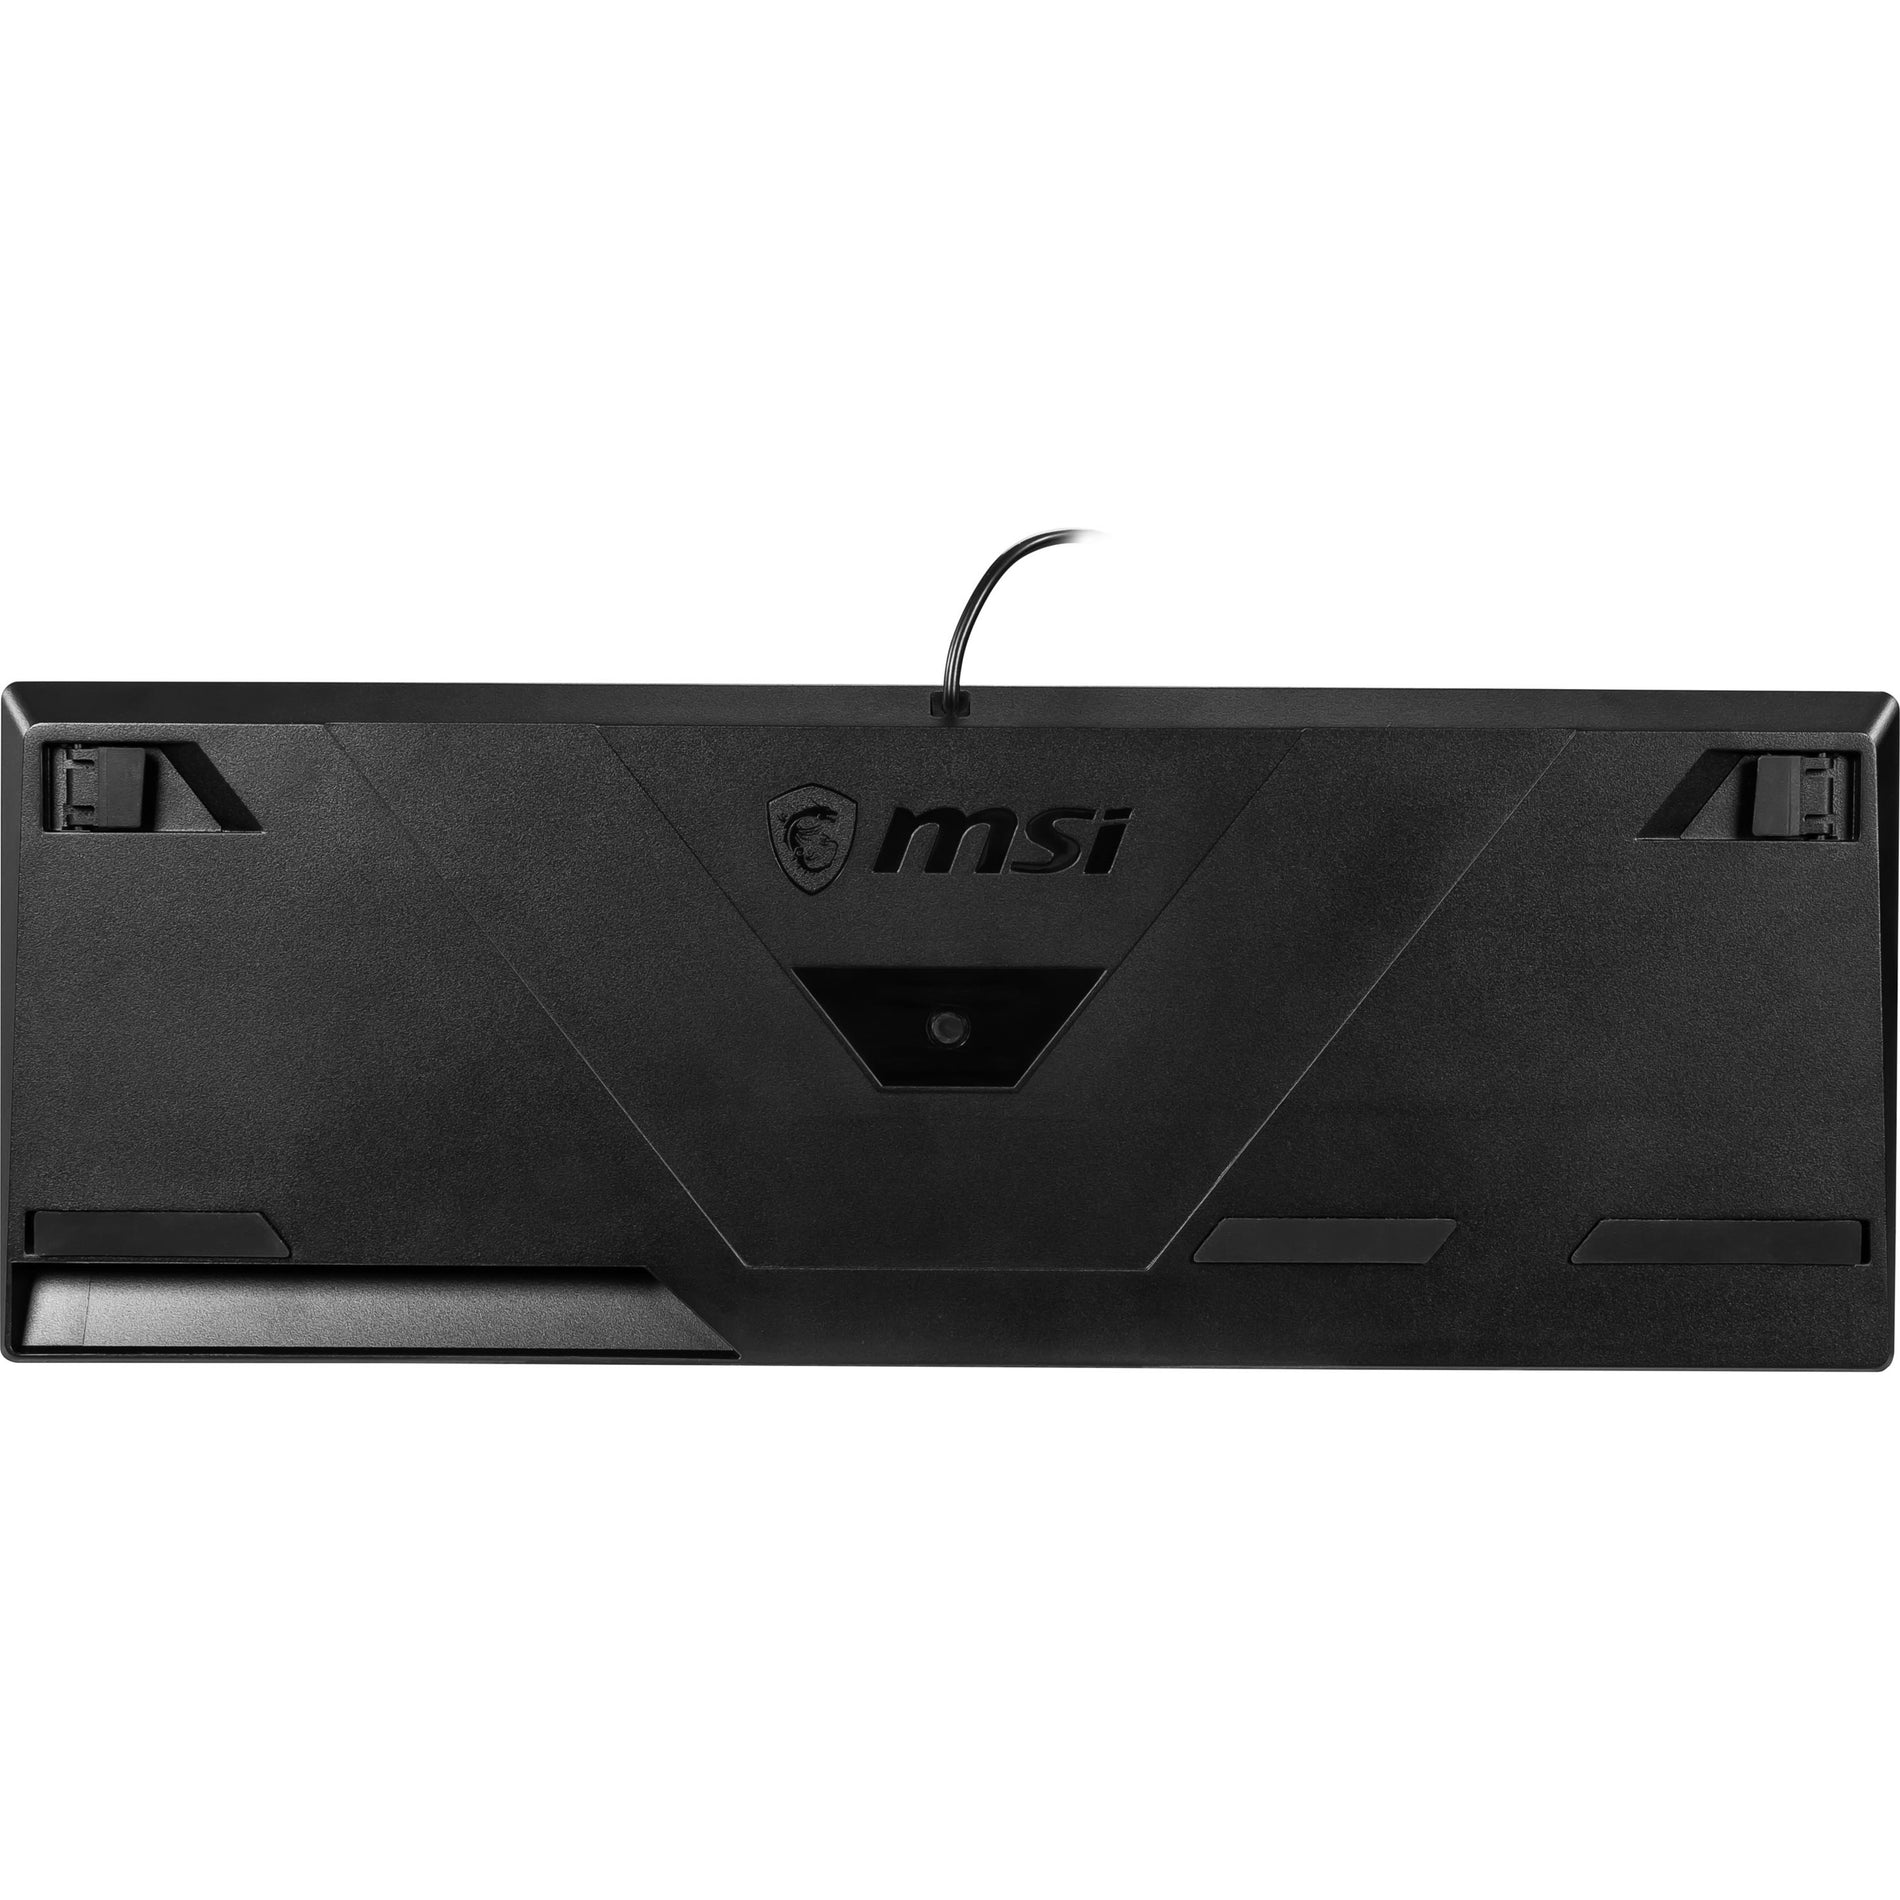 MSI VIGOR GK30 Gaming Keyboard, RGB Backlight, Plunger Keyswitch Technology, Water Resistant